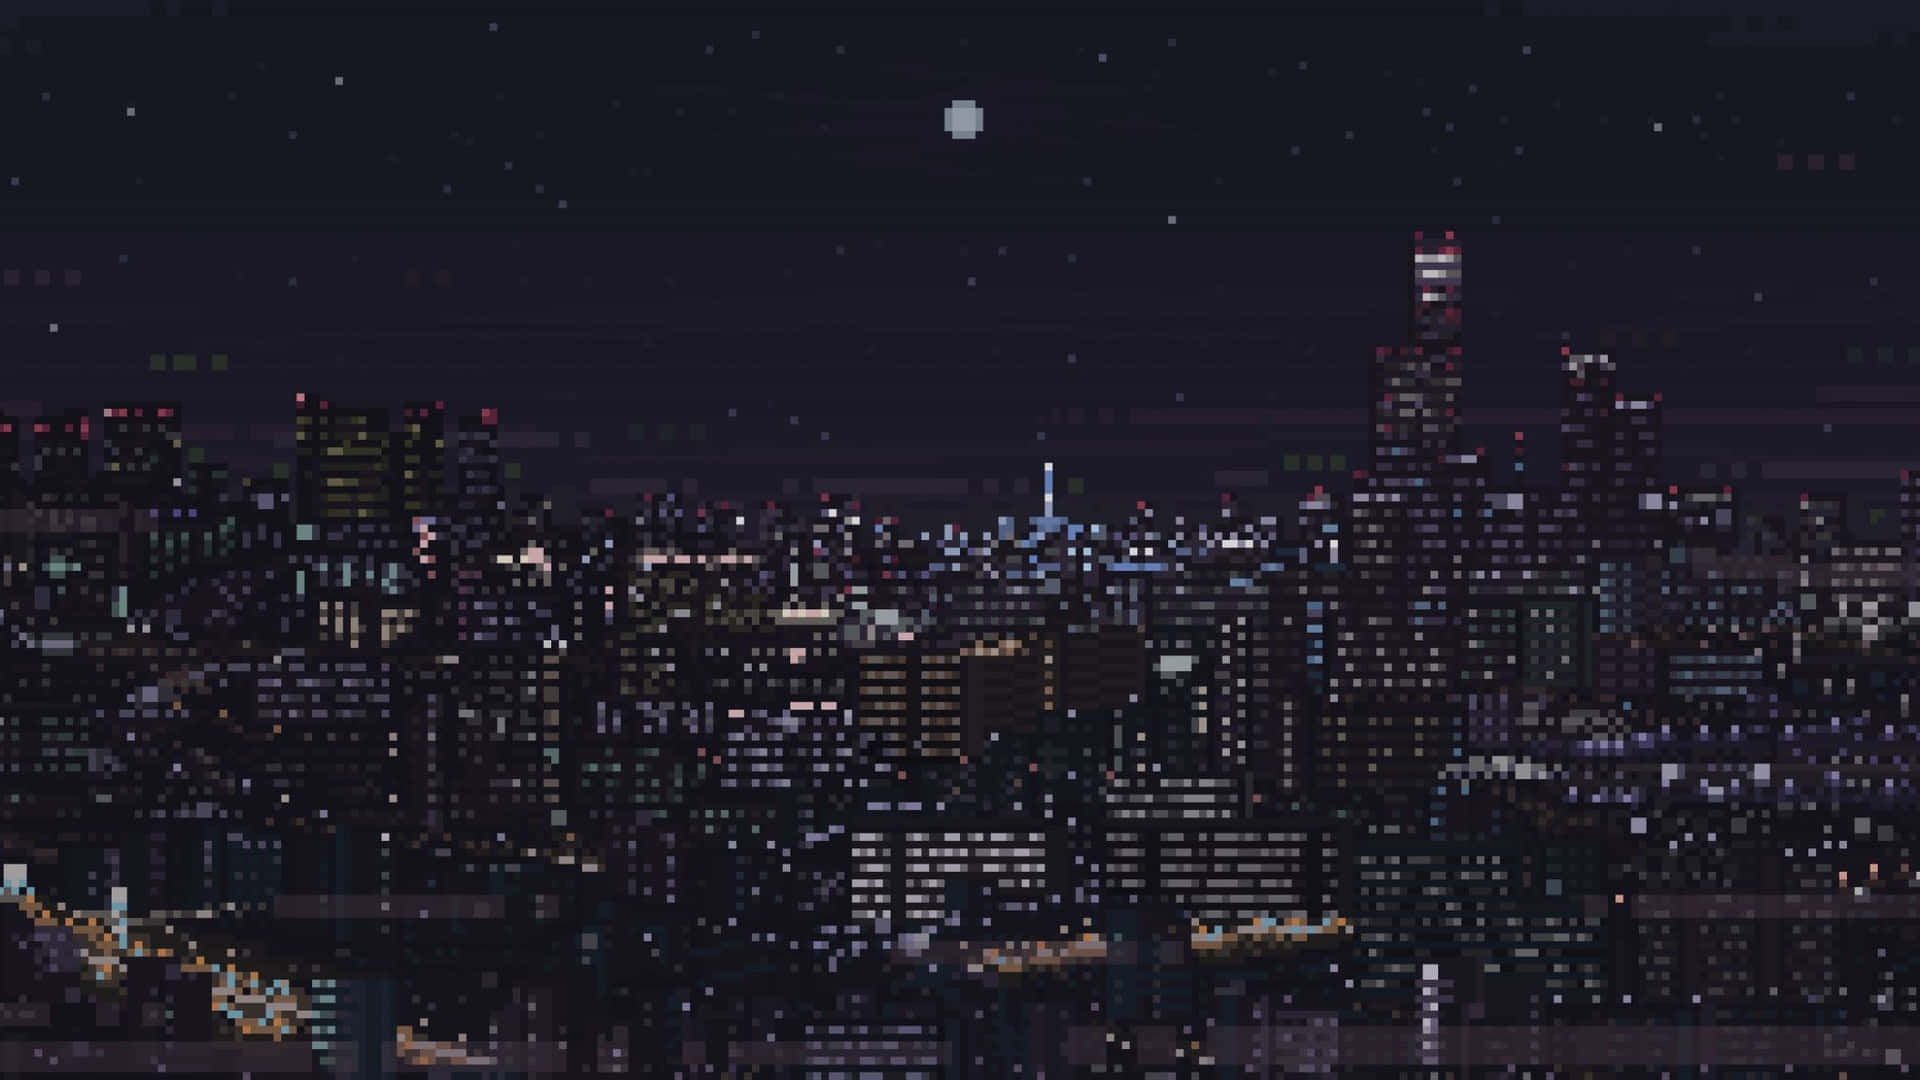 Pixel Art Cityscape At Night Background